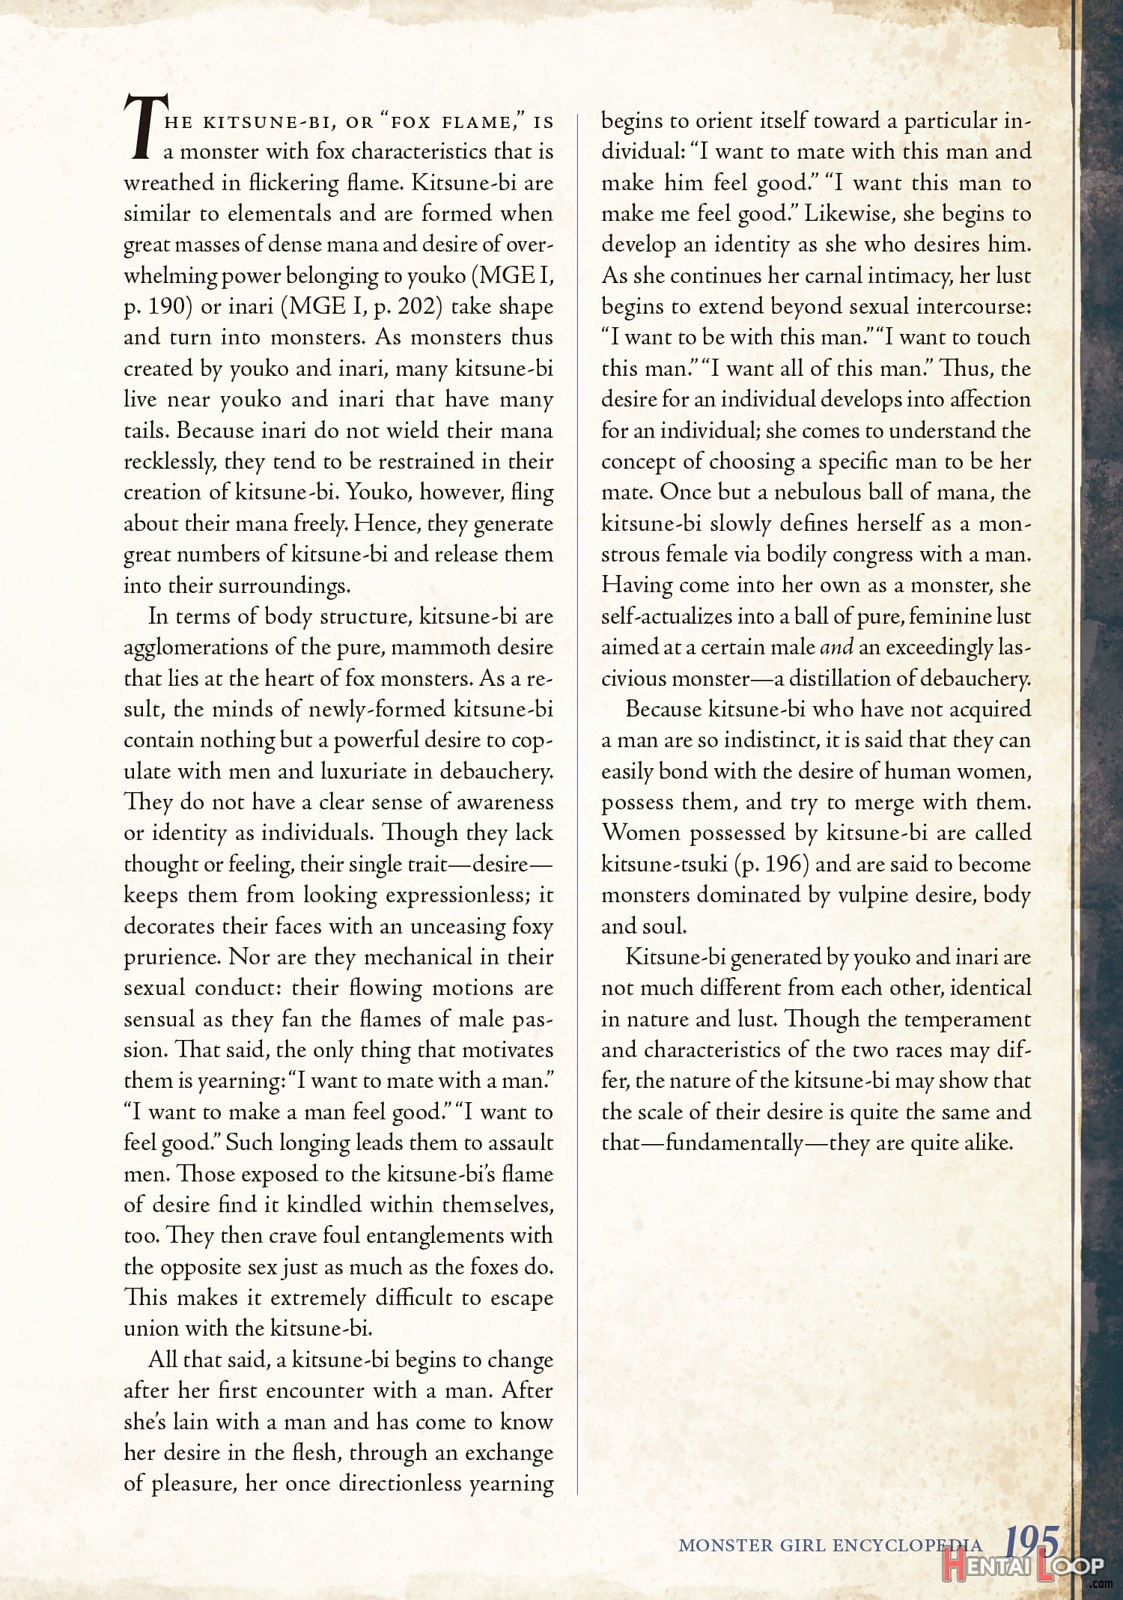 Monster Girl Encyclopedia Vol. 2 page 196